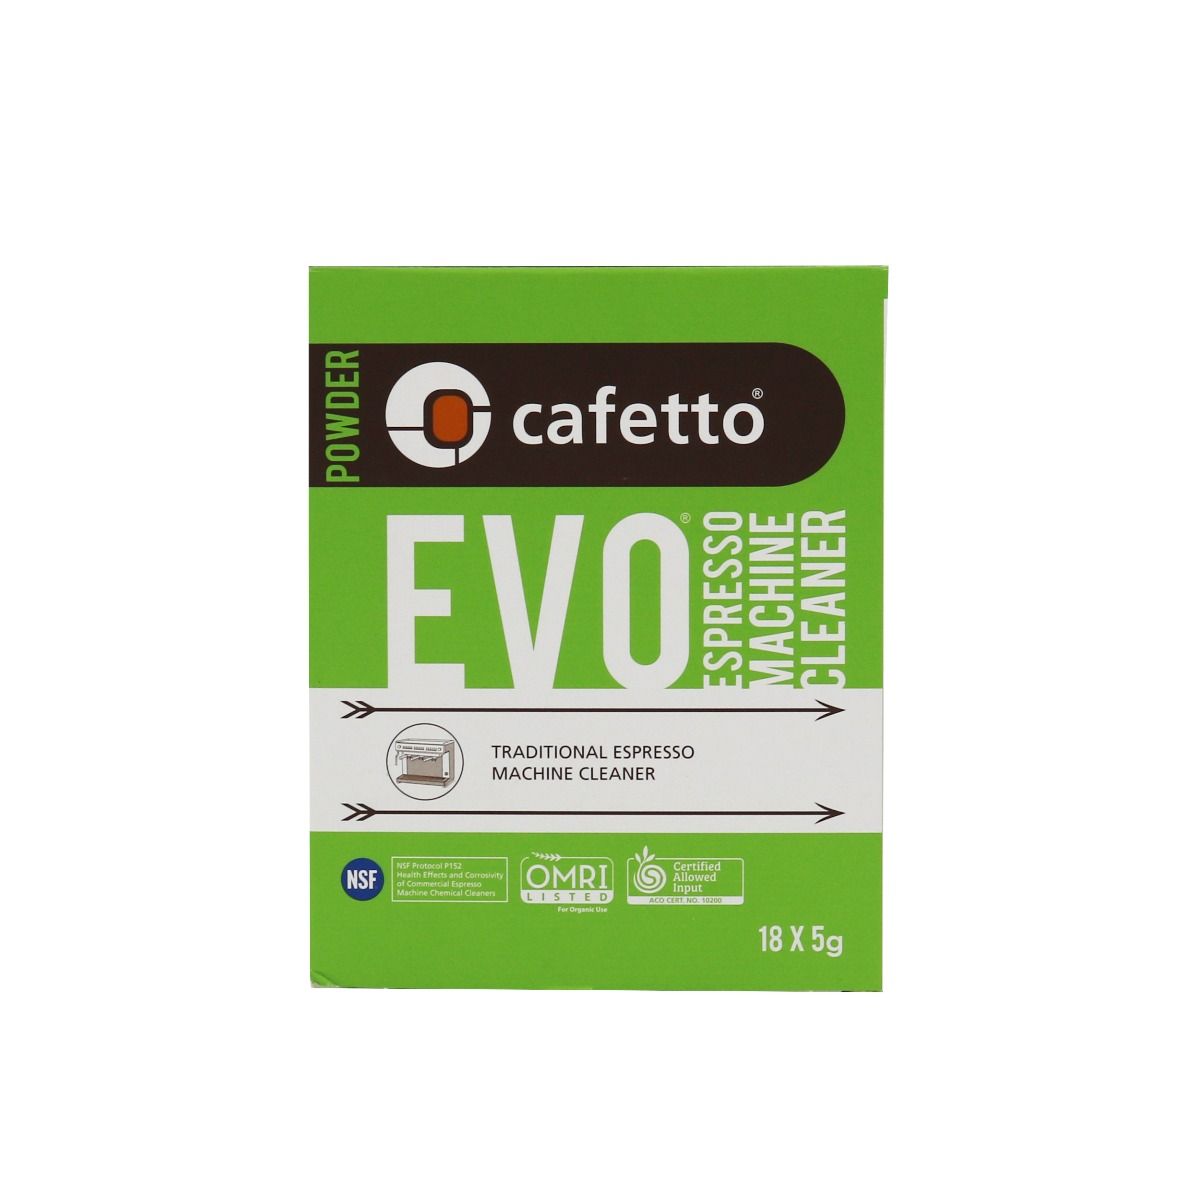 Cafetto - EVO Espresso Machine Cleaner - 18 X 5g Sachet (12pks Per Carton)